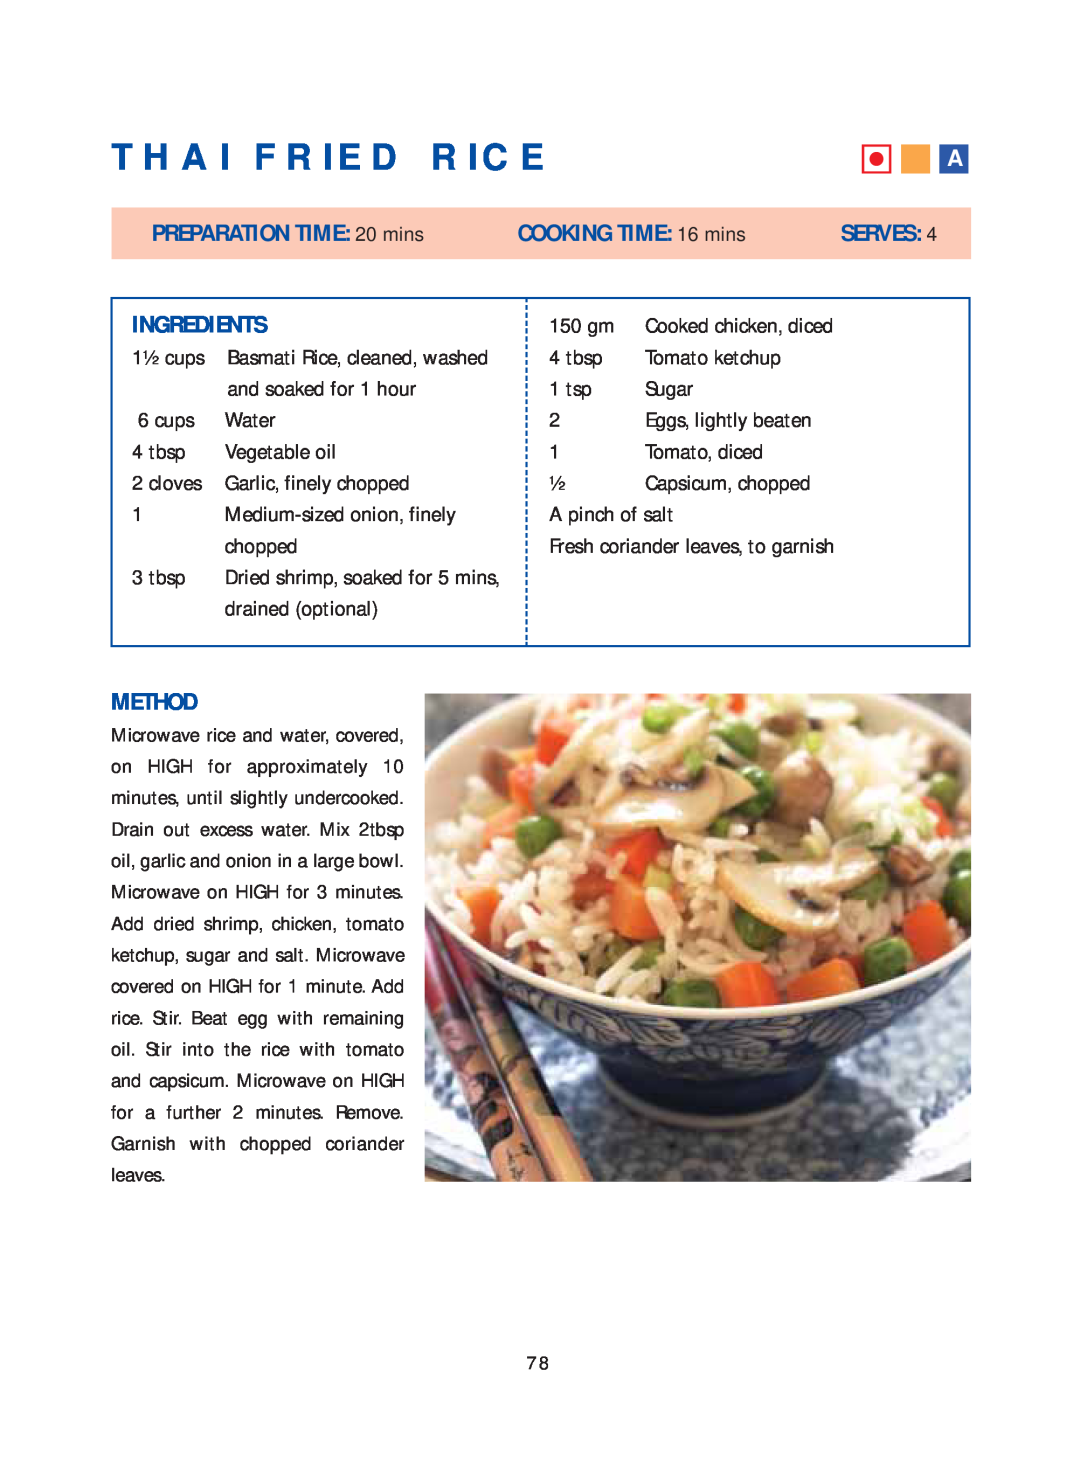 Samsung Microwave Oven warranty Thai Fried Rice 